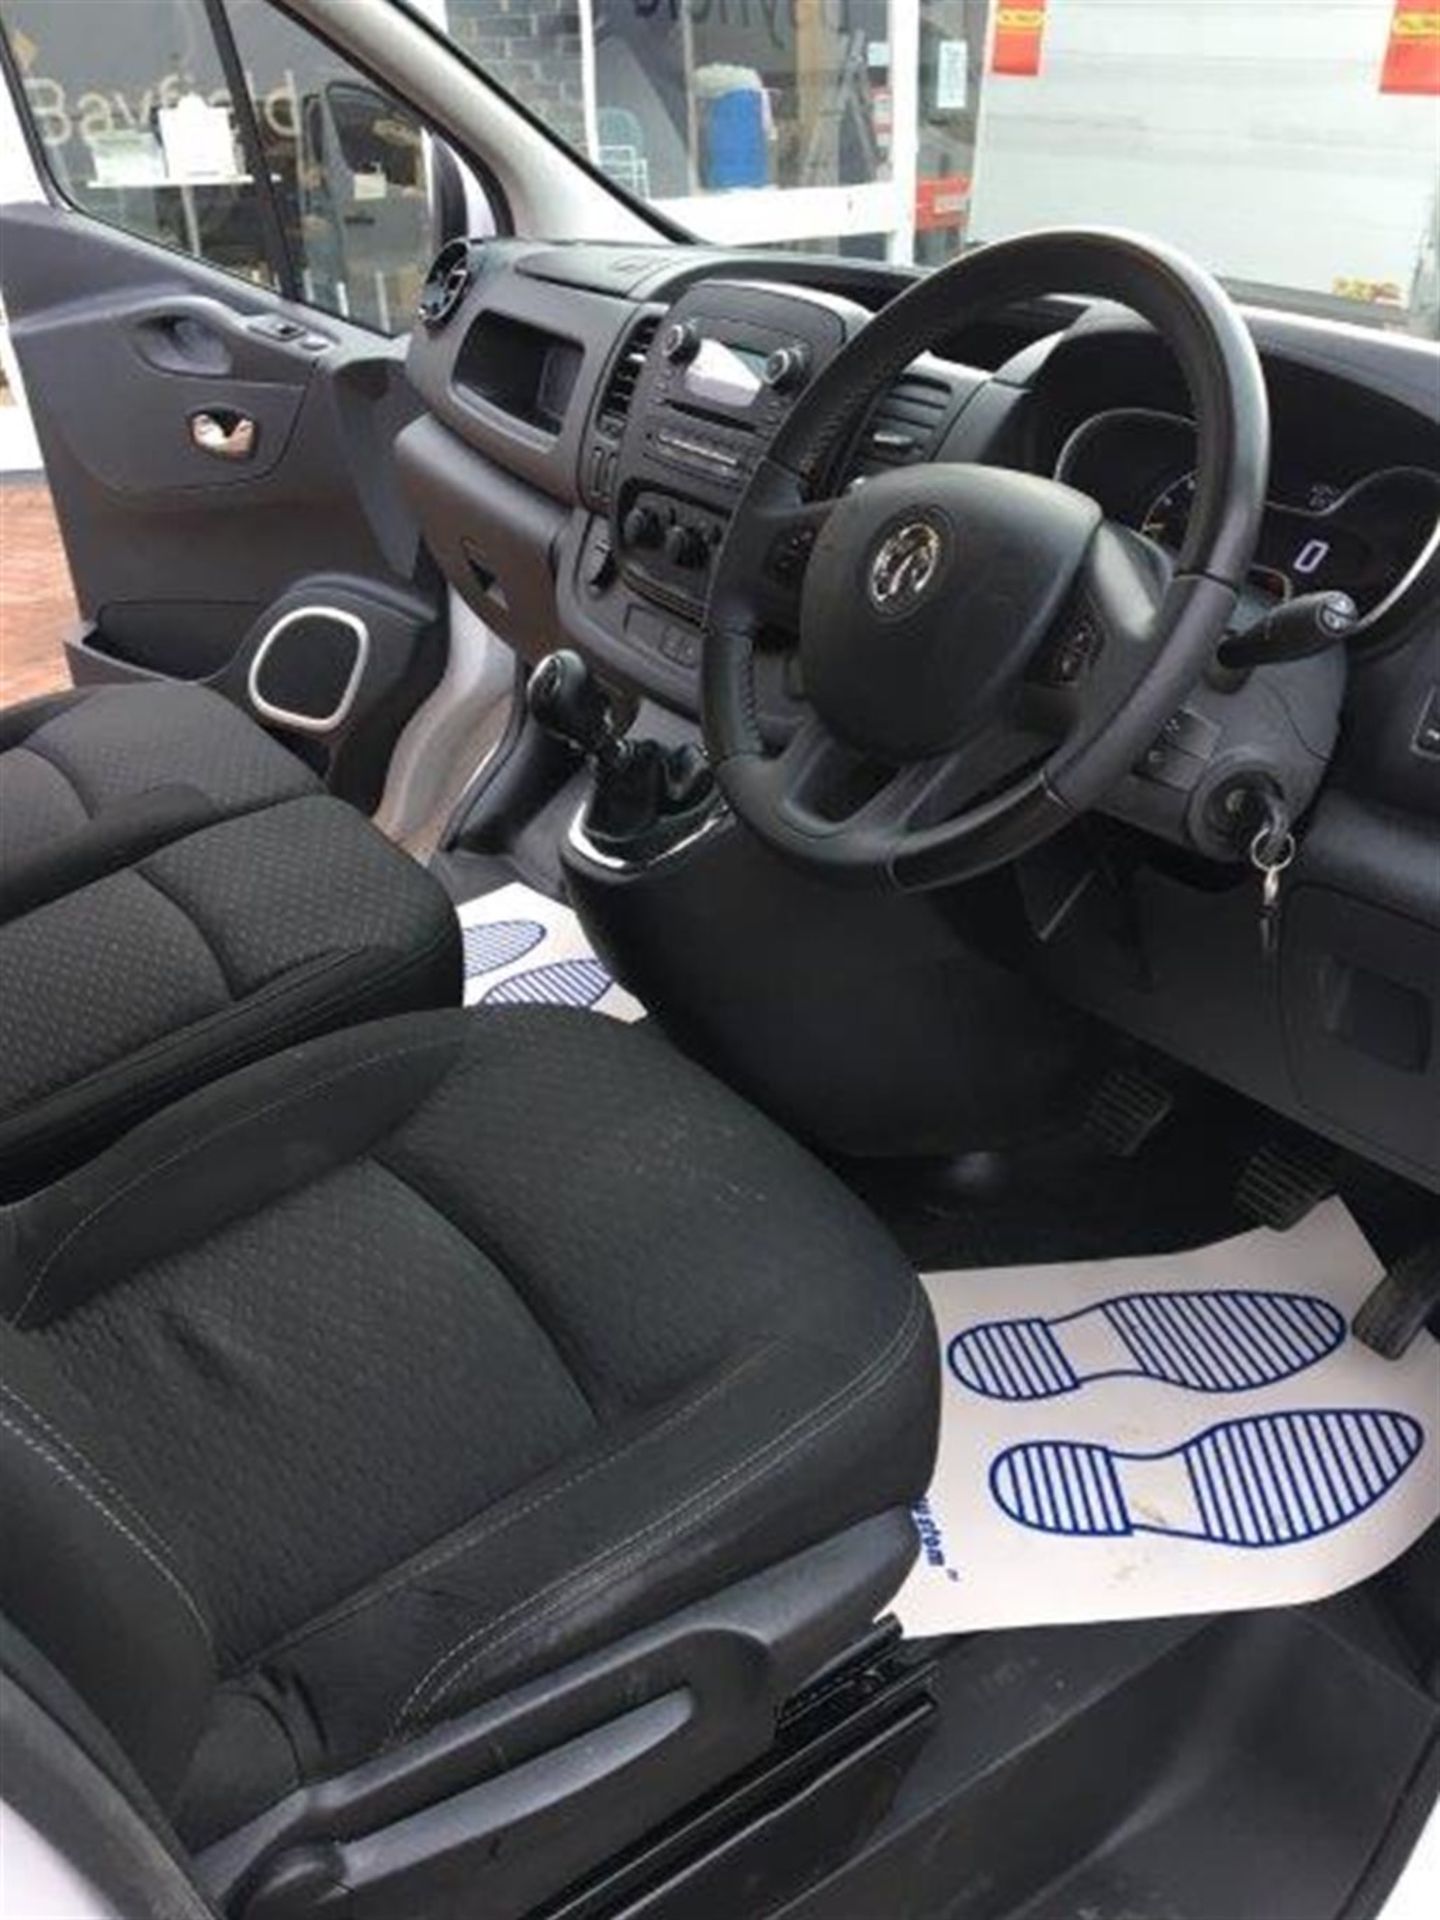 Vauxhall Vivaro L1:H1 1.6 CDTi 115ps Sportive Panel van 2.7t - Image 6 of 9